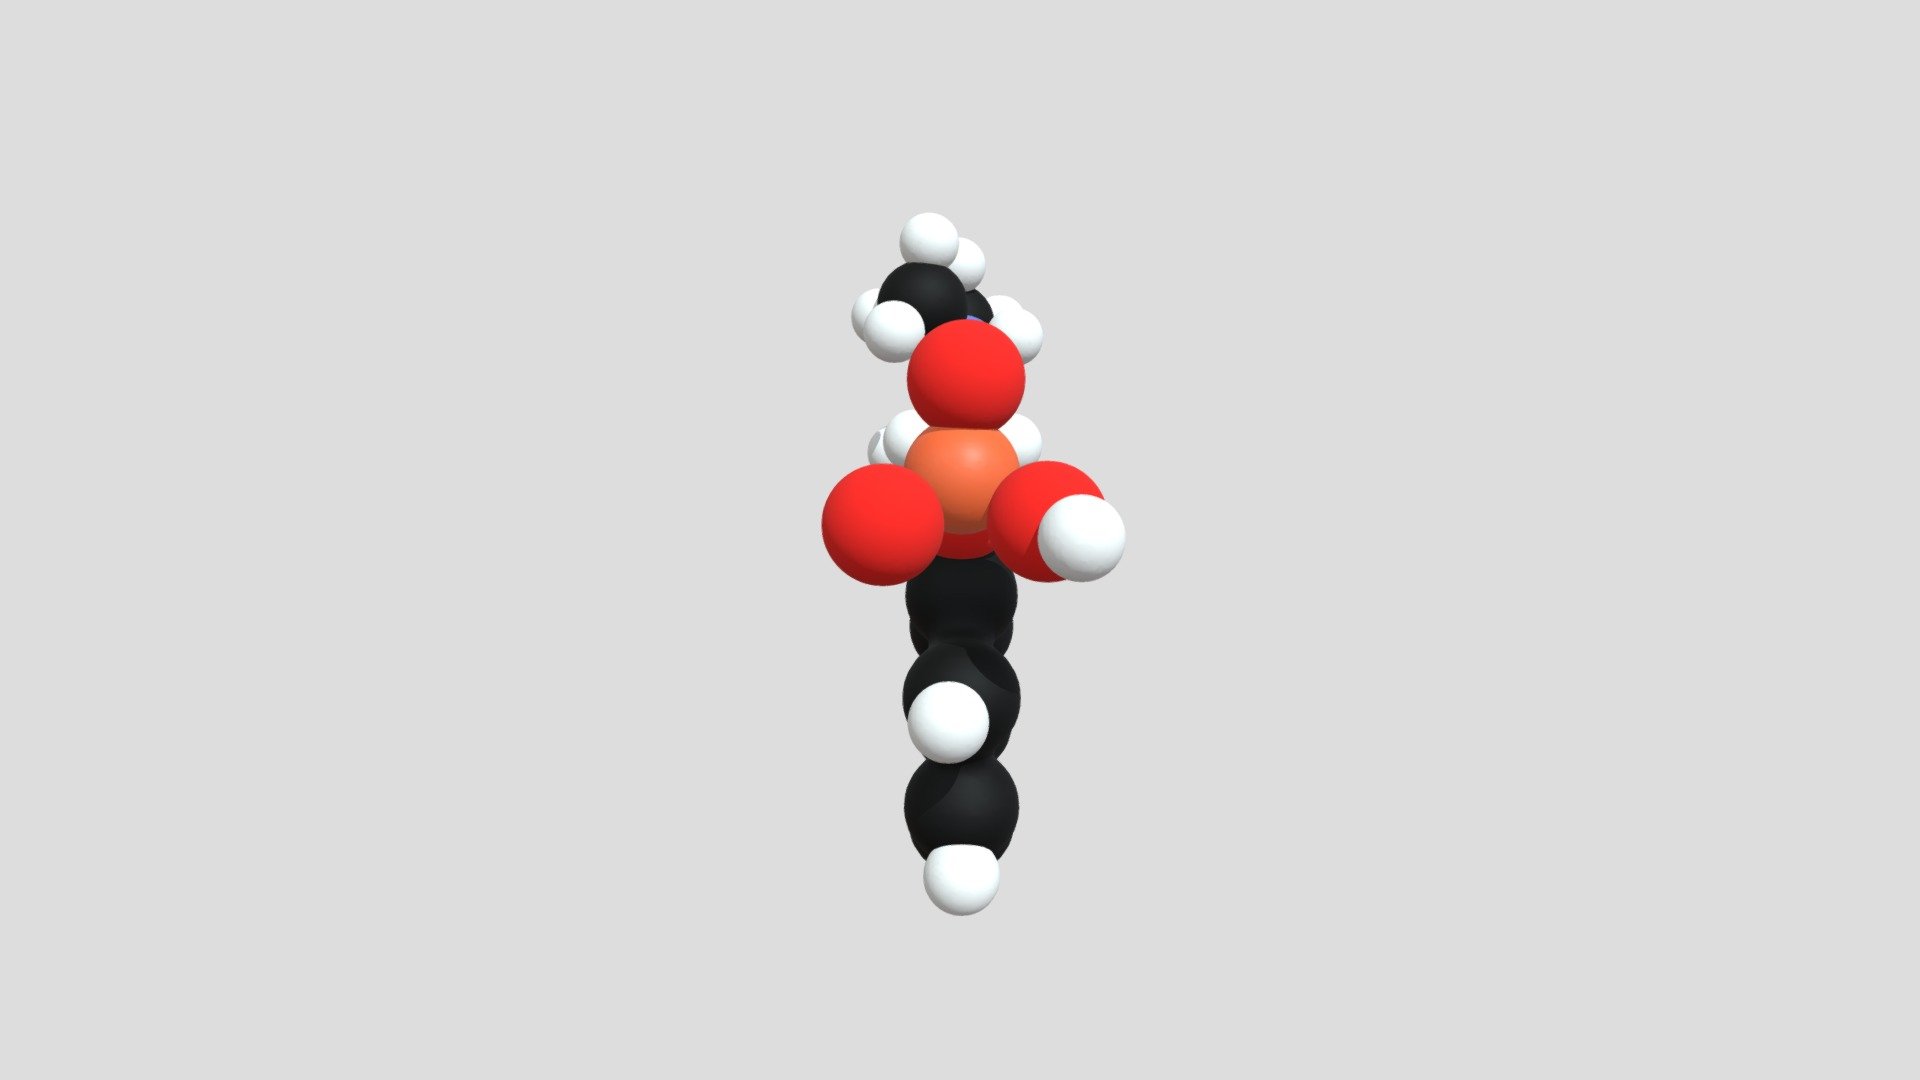 The 3D molecular structure of the psyco-active chemical Psilocybin C12H17N2O4P - Psilocybin Molecule - 3D model by Justin (@astrocbr) 3d model